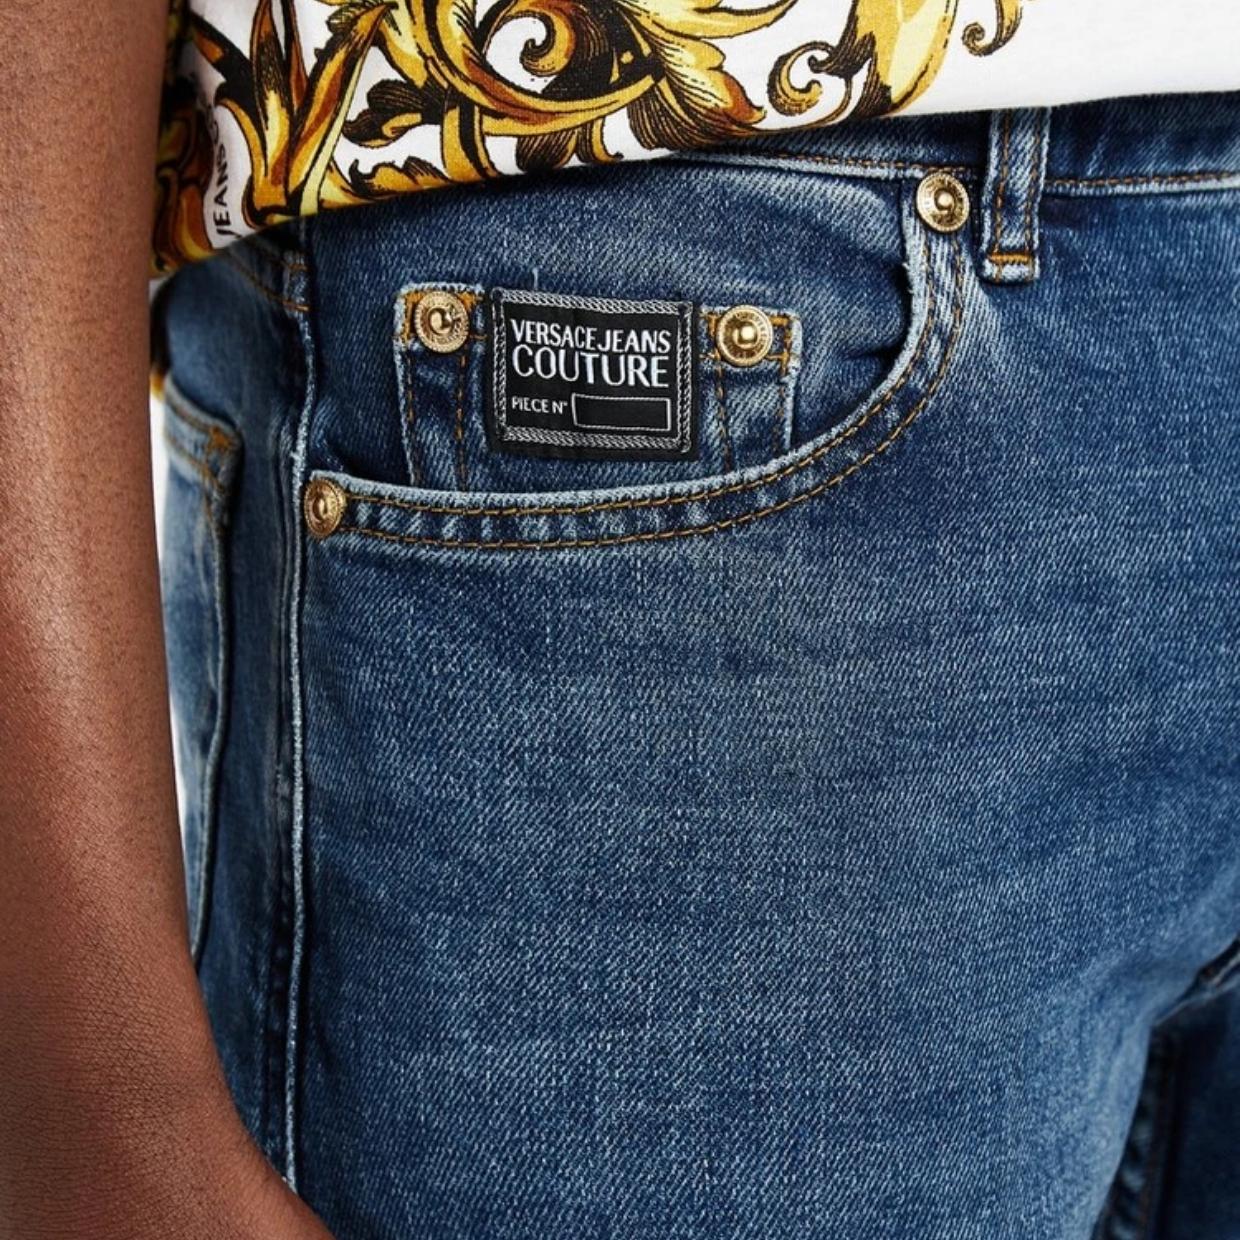 Versace denim jeans with logo detail